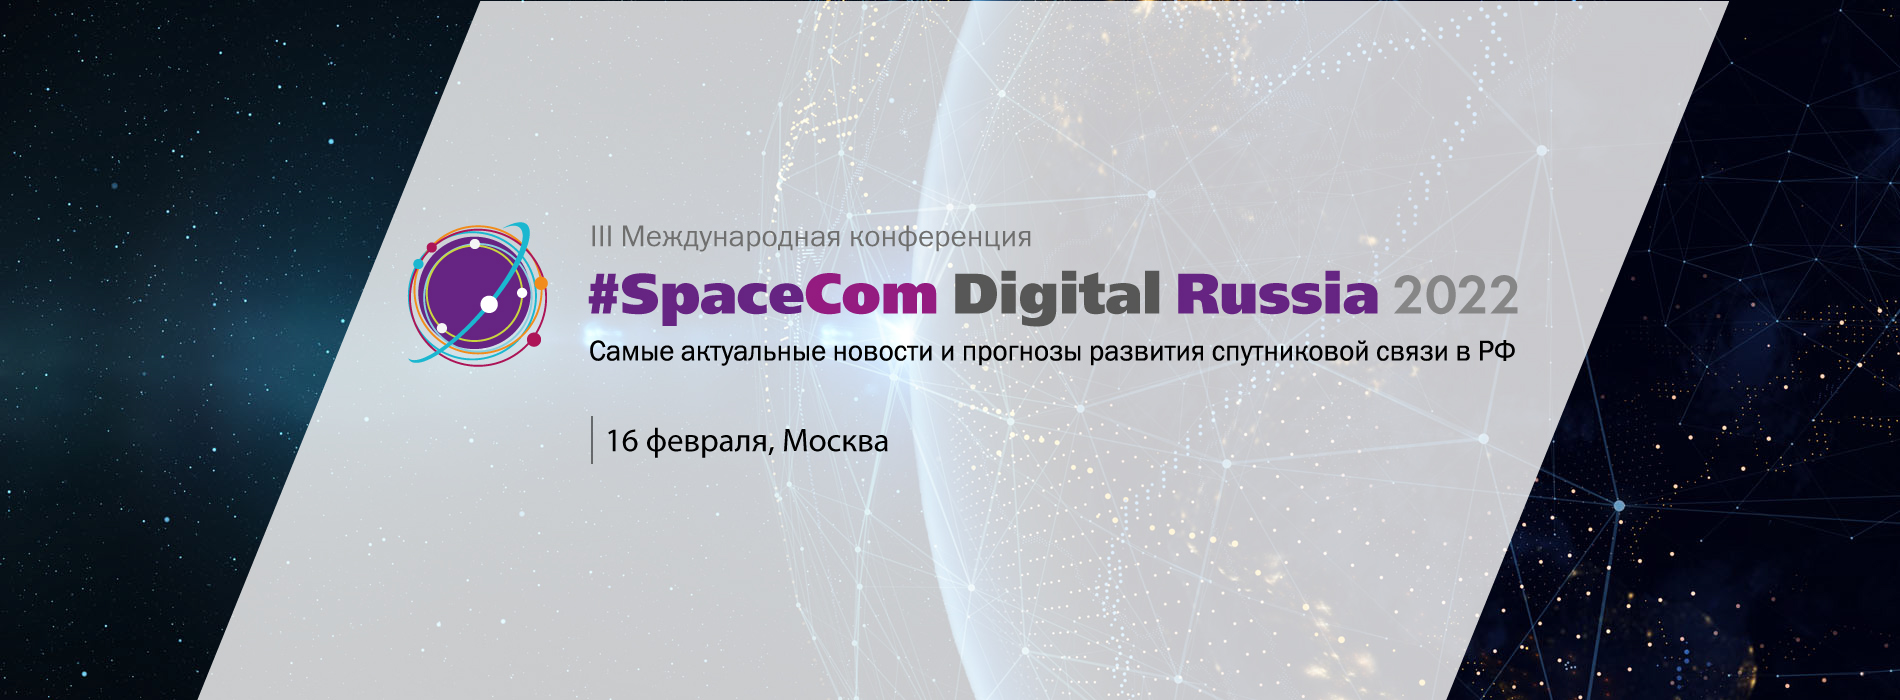 #SpaceCom Digital Russia 2022